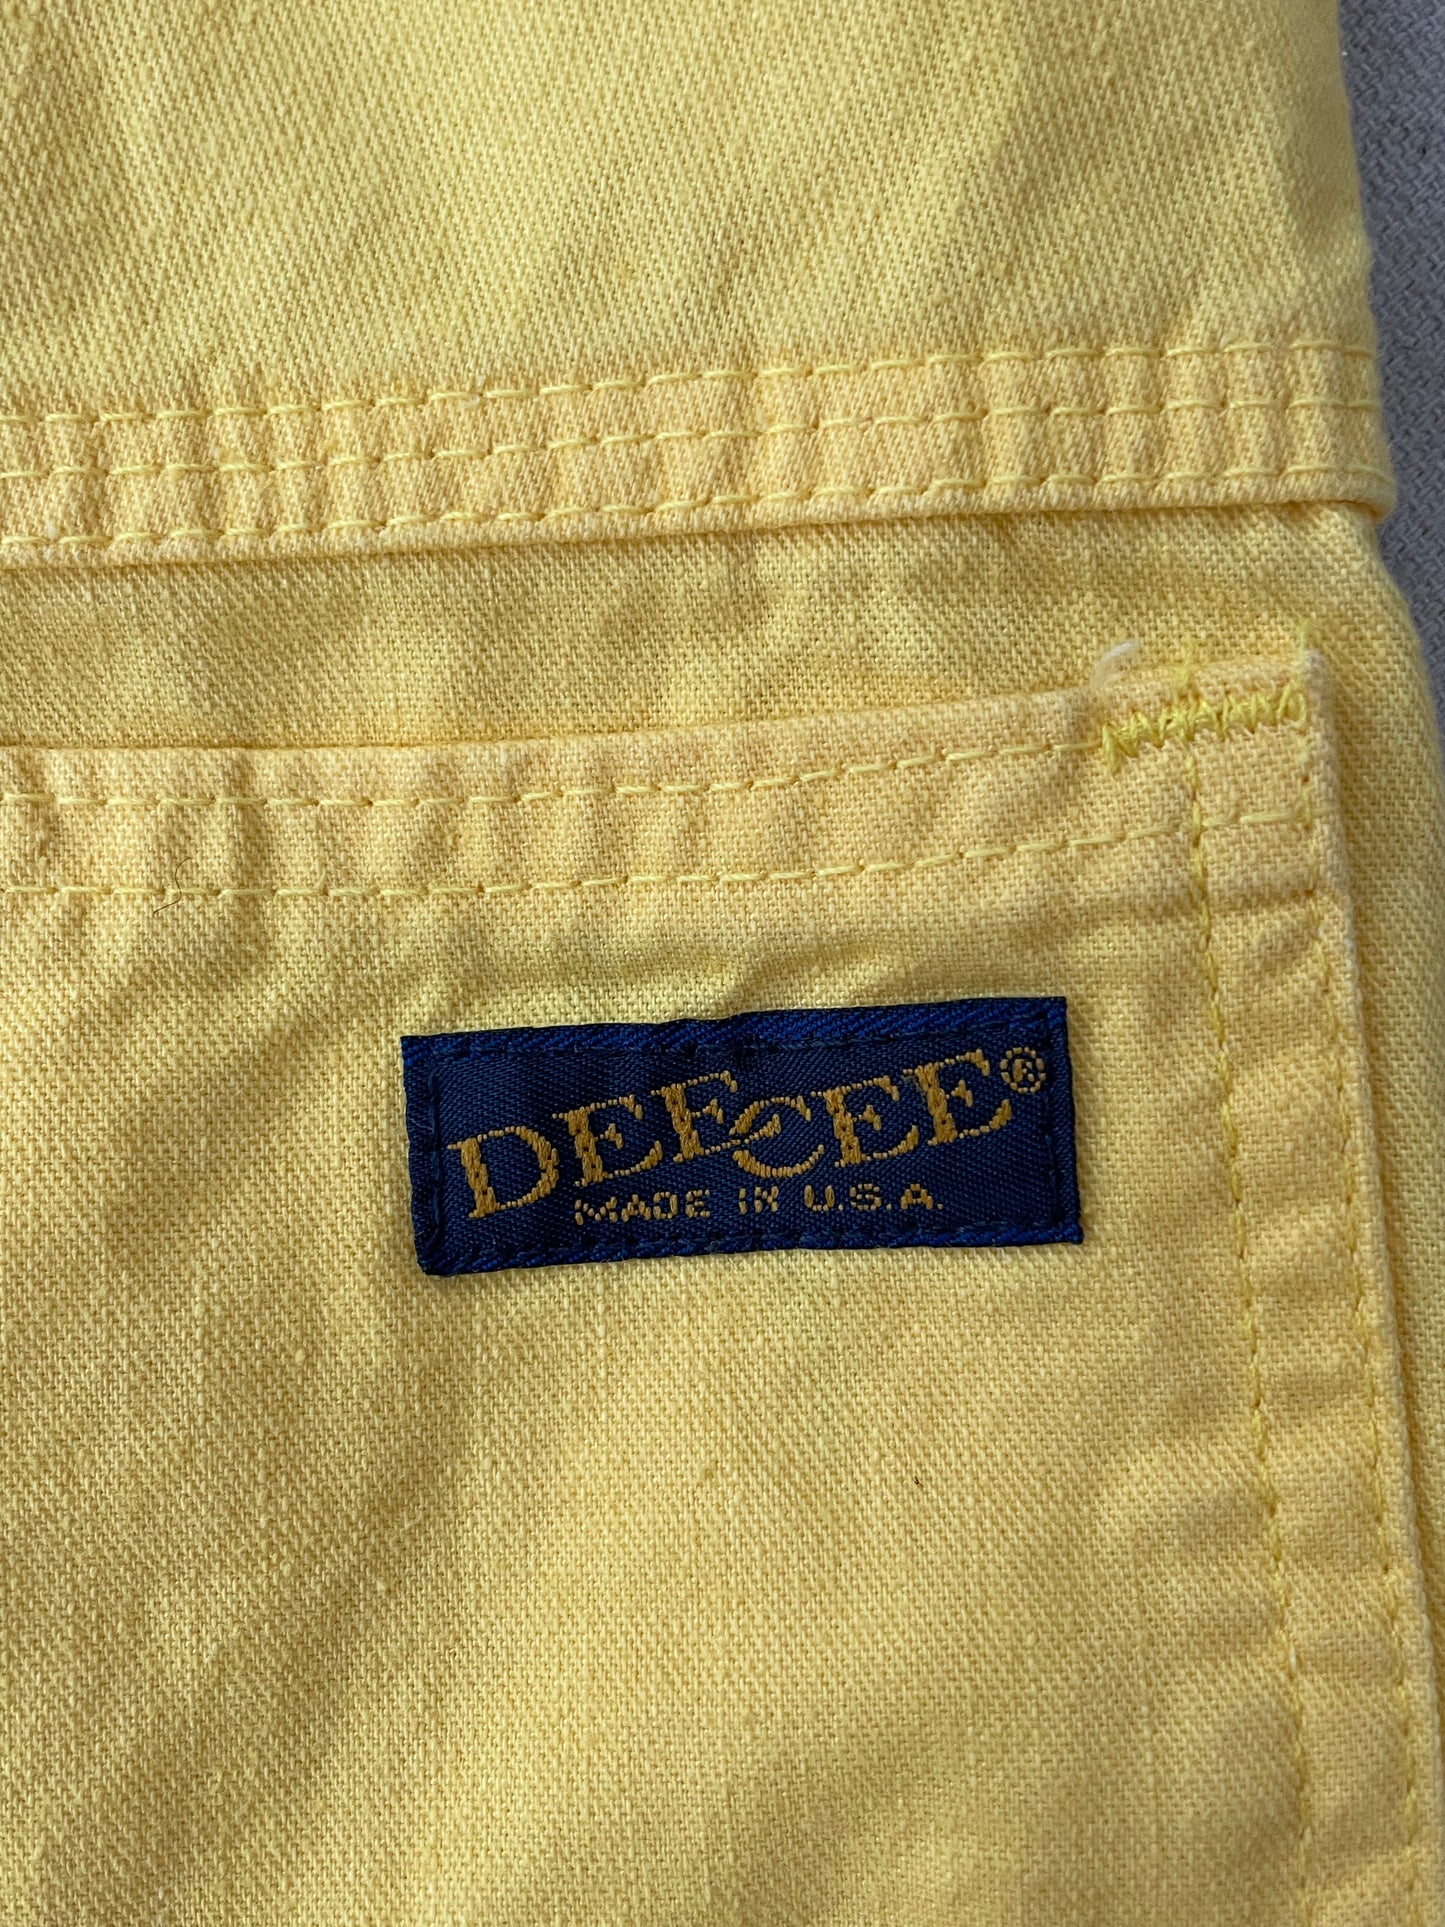 70s/80s Yellow DeeCee Carpenter Pants